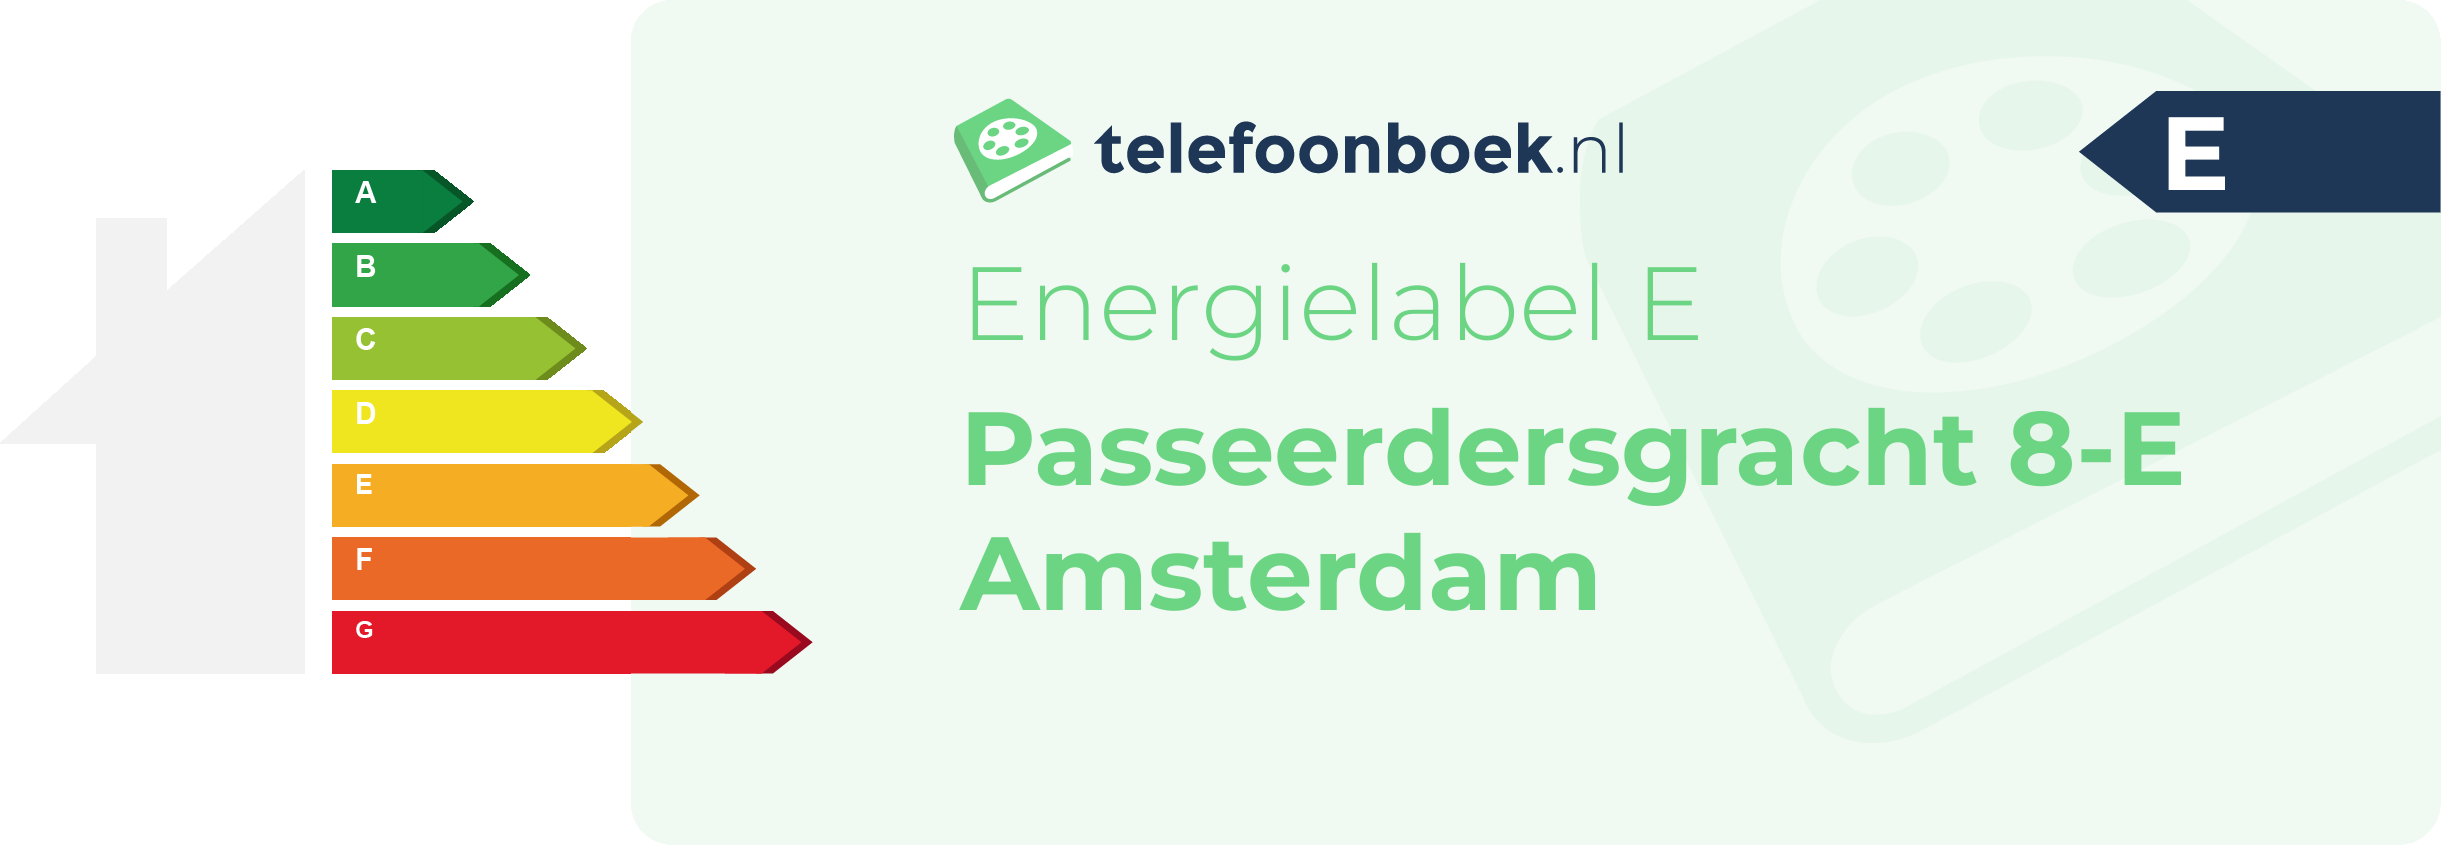 Energielabel Passeerdersgracht 8-E Amsterdam